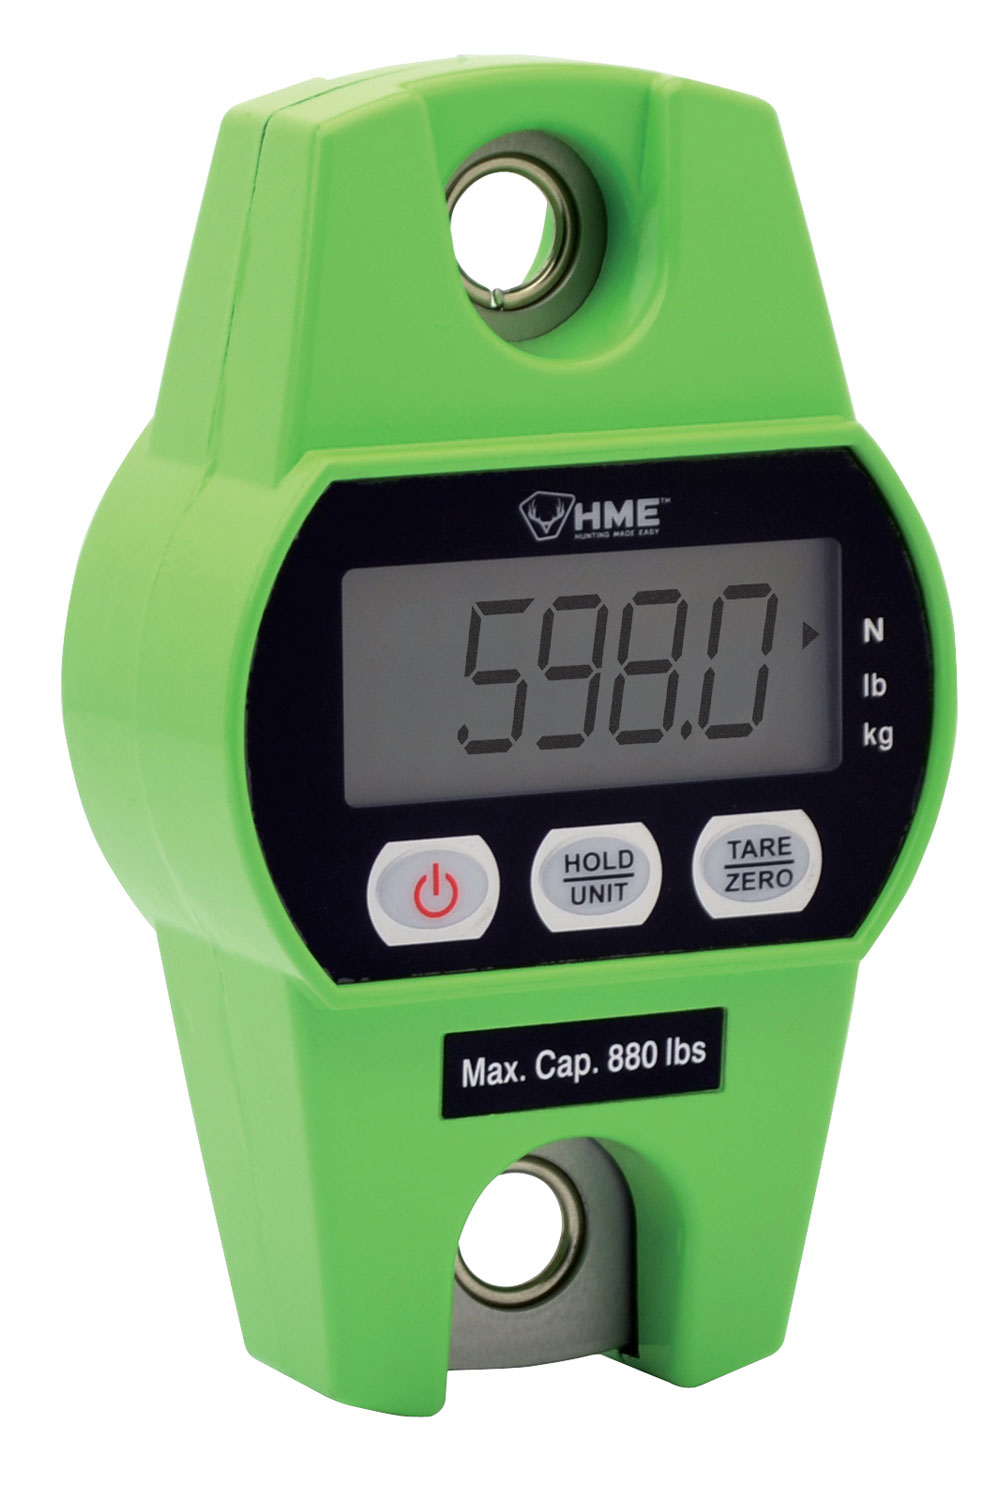 HME SCALE Game Scale Digital Green 880 lbs